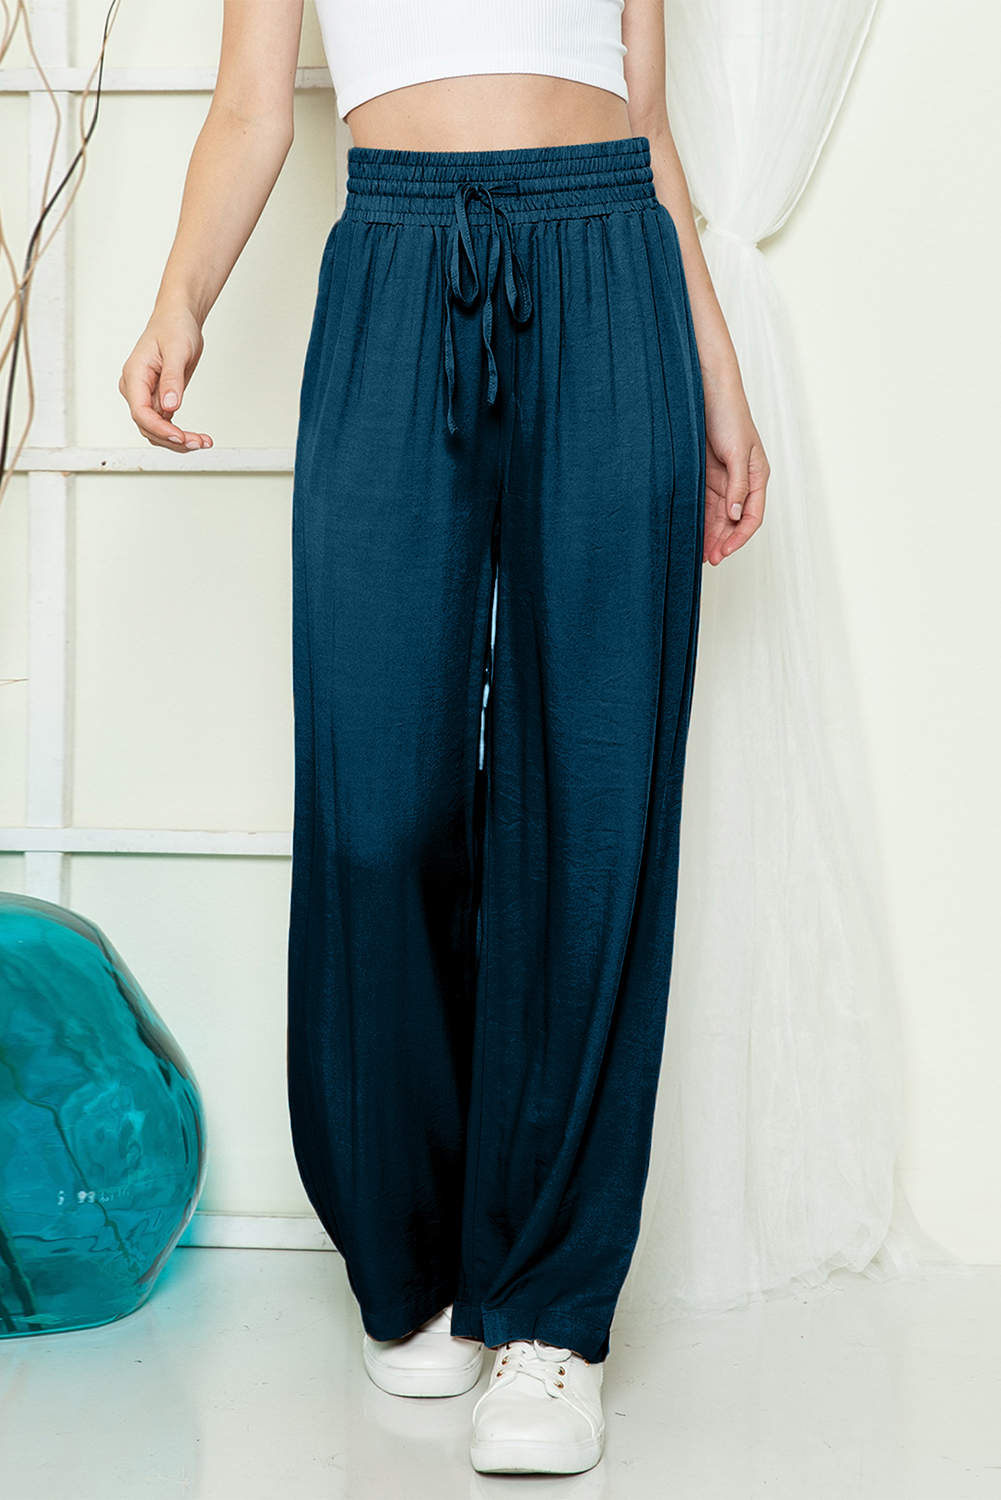 Shewin Wholesale Fashion Blue Casual Drawstring Shirred Elastic Waist Wide Leg PANTS